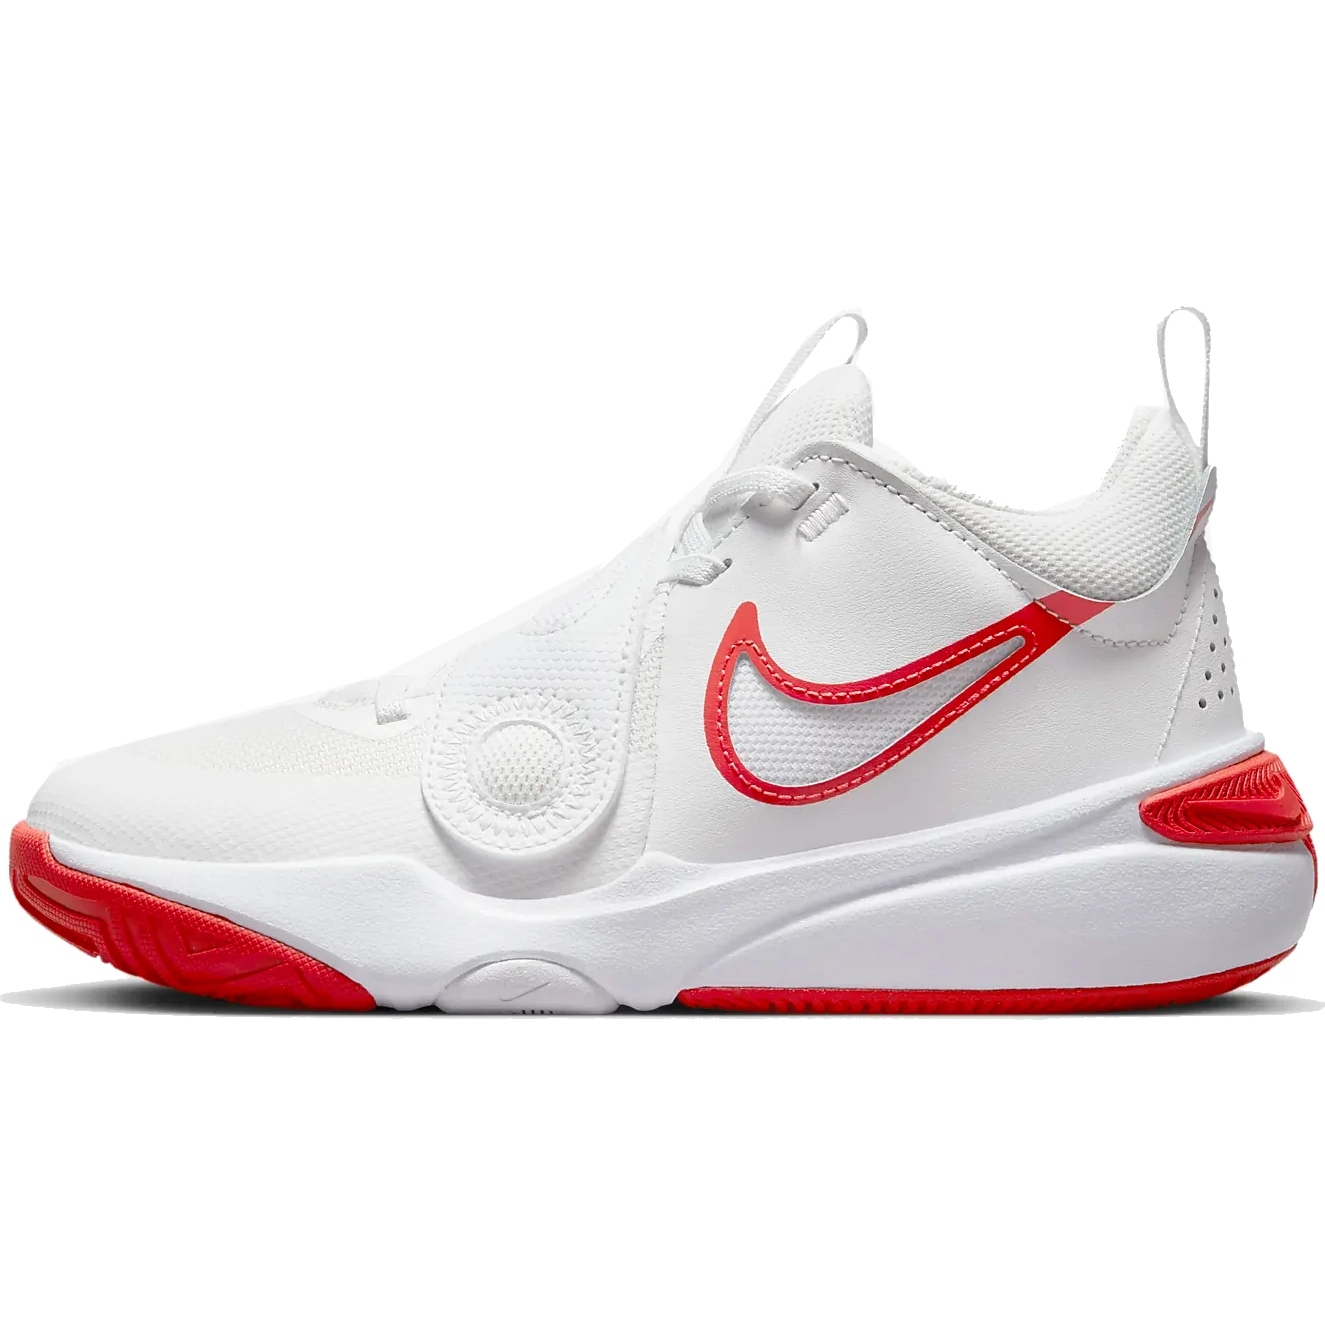 Nike Kevin Durant Trey 5 IX Basketball Shoes White | Basketball